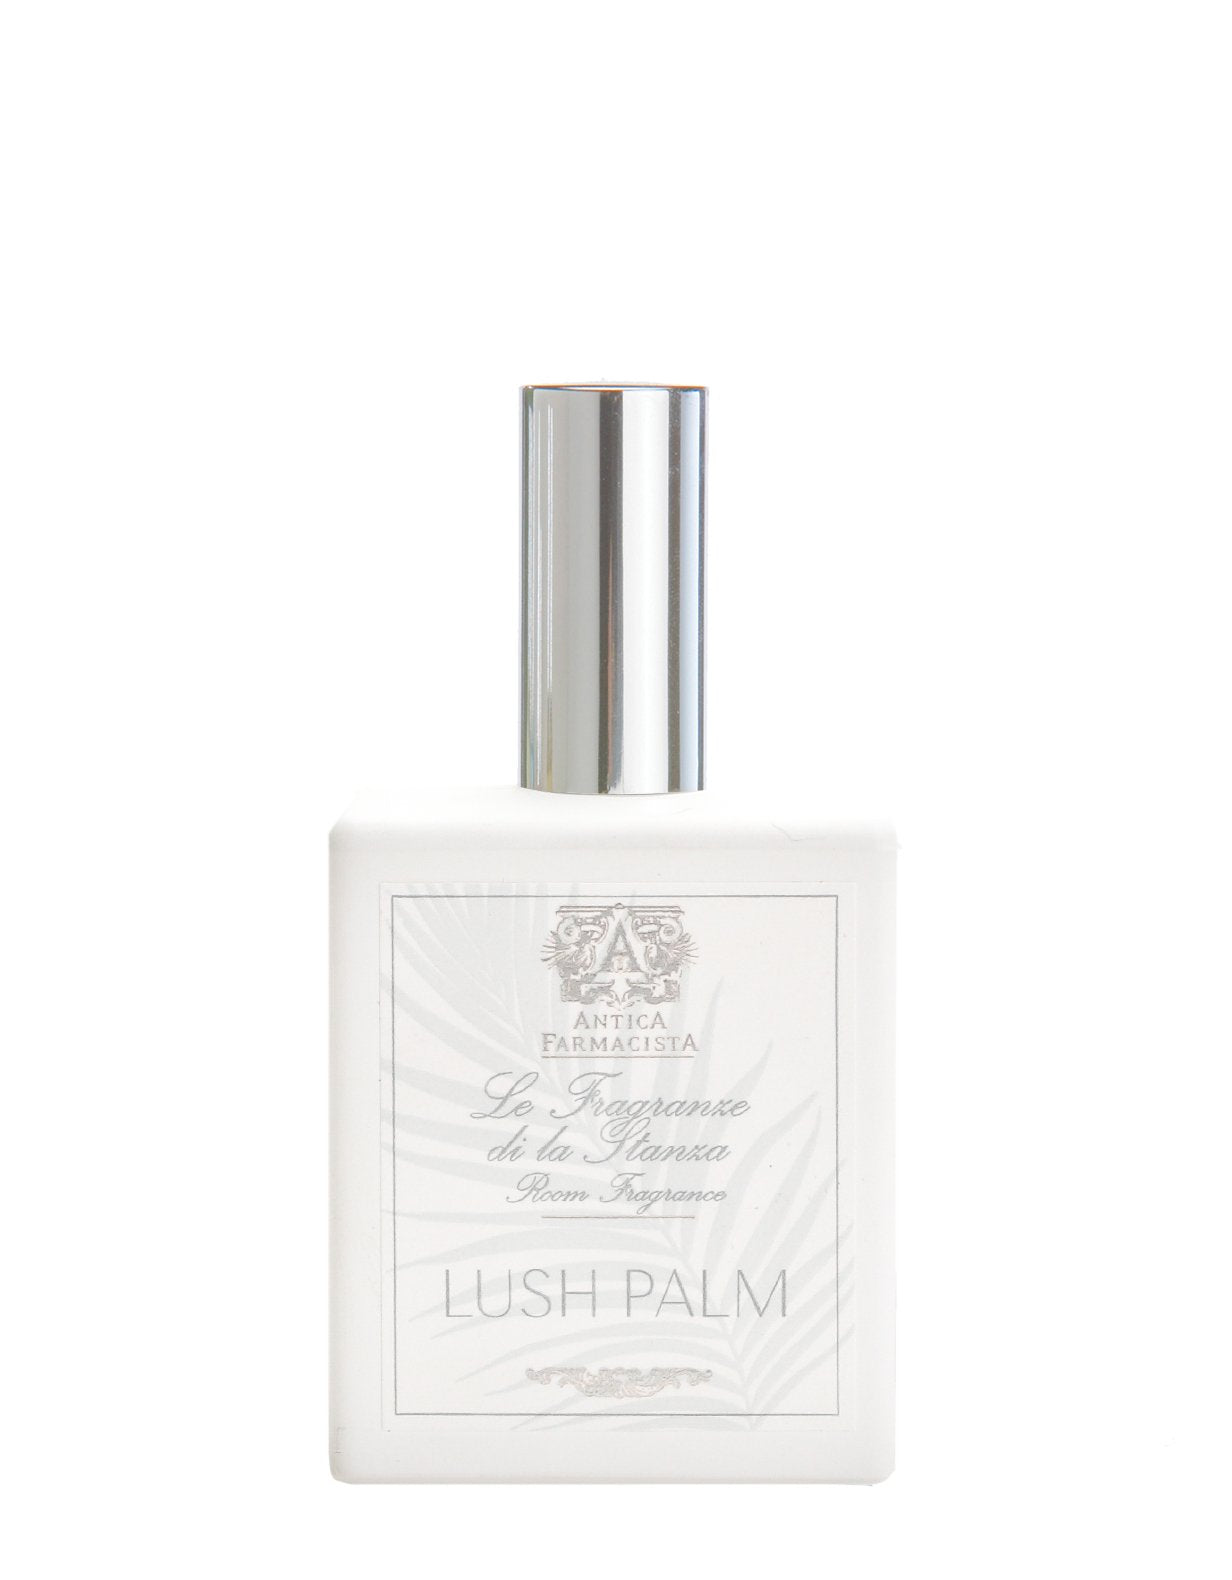 Lush Palm Room Fragrance